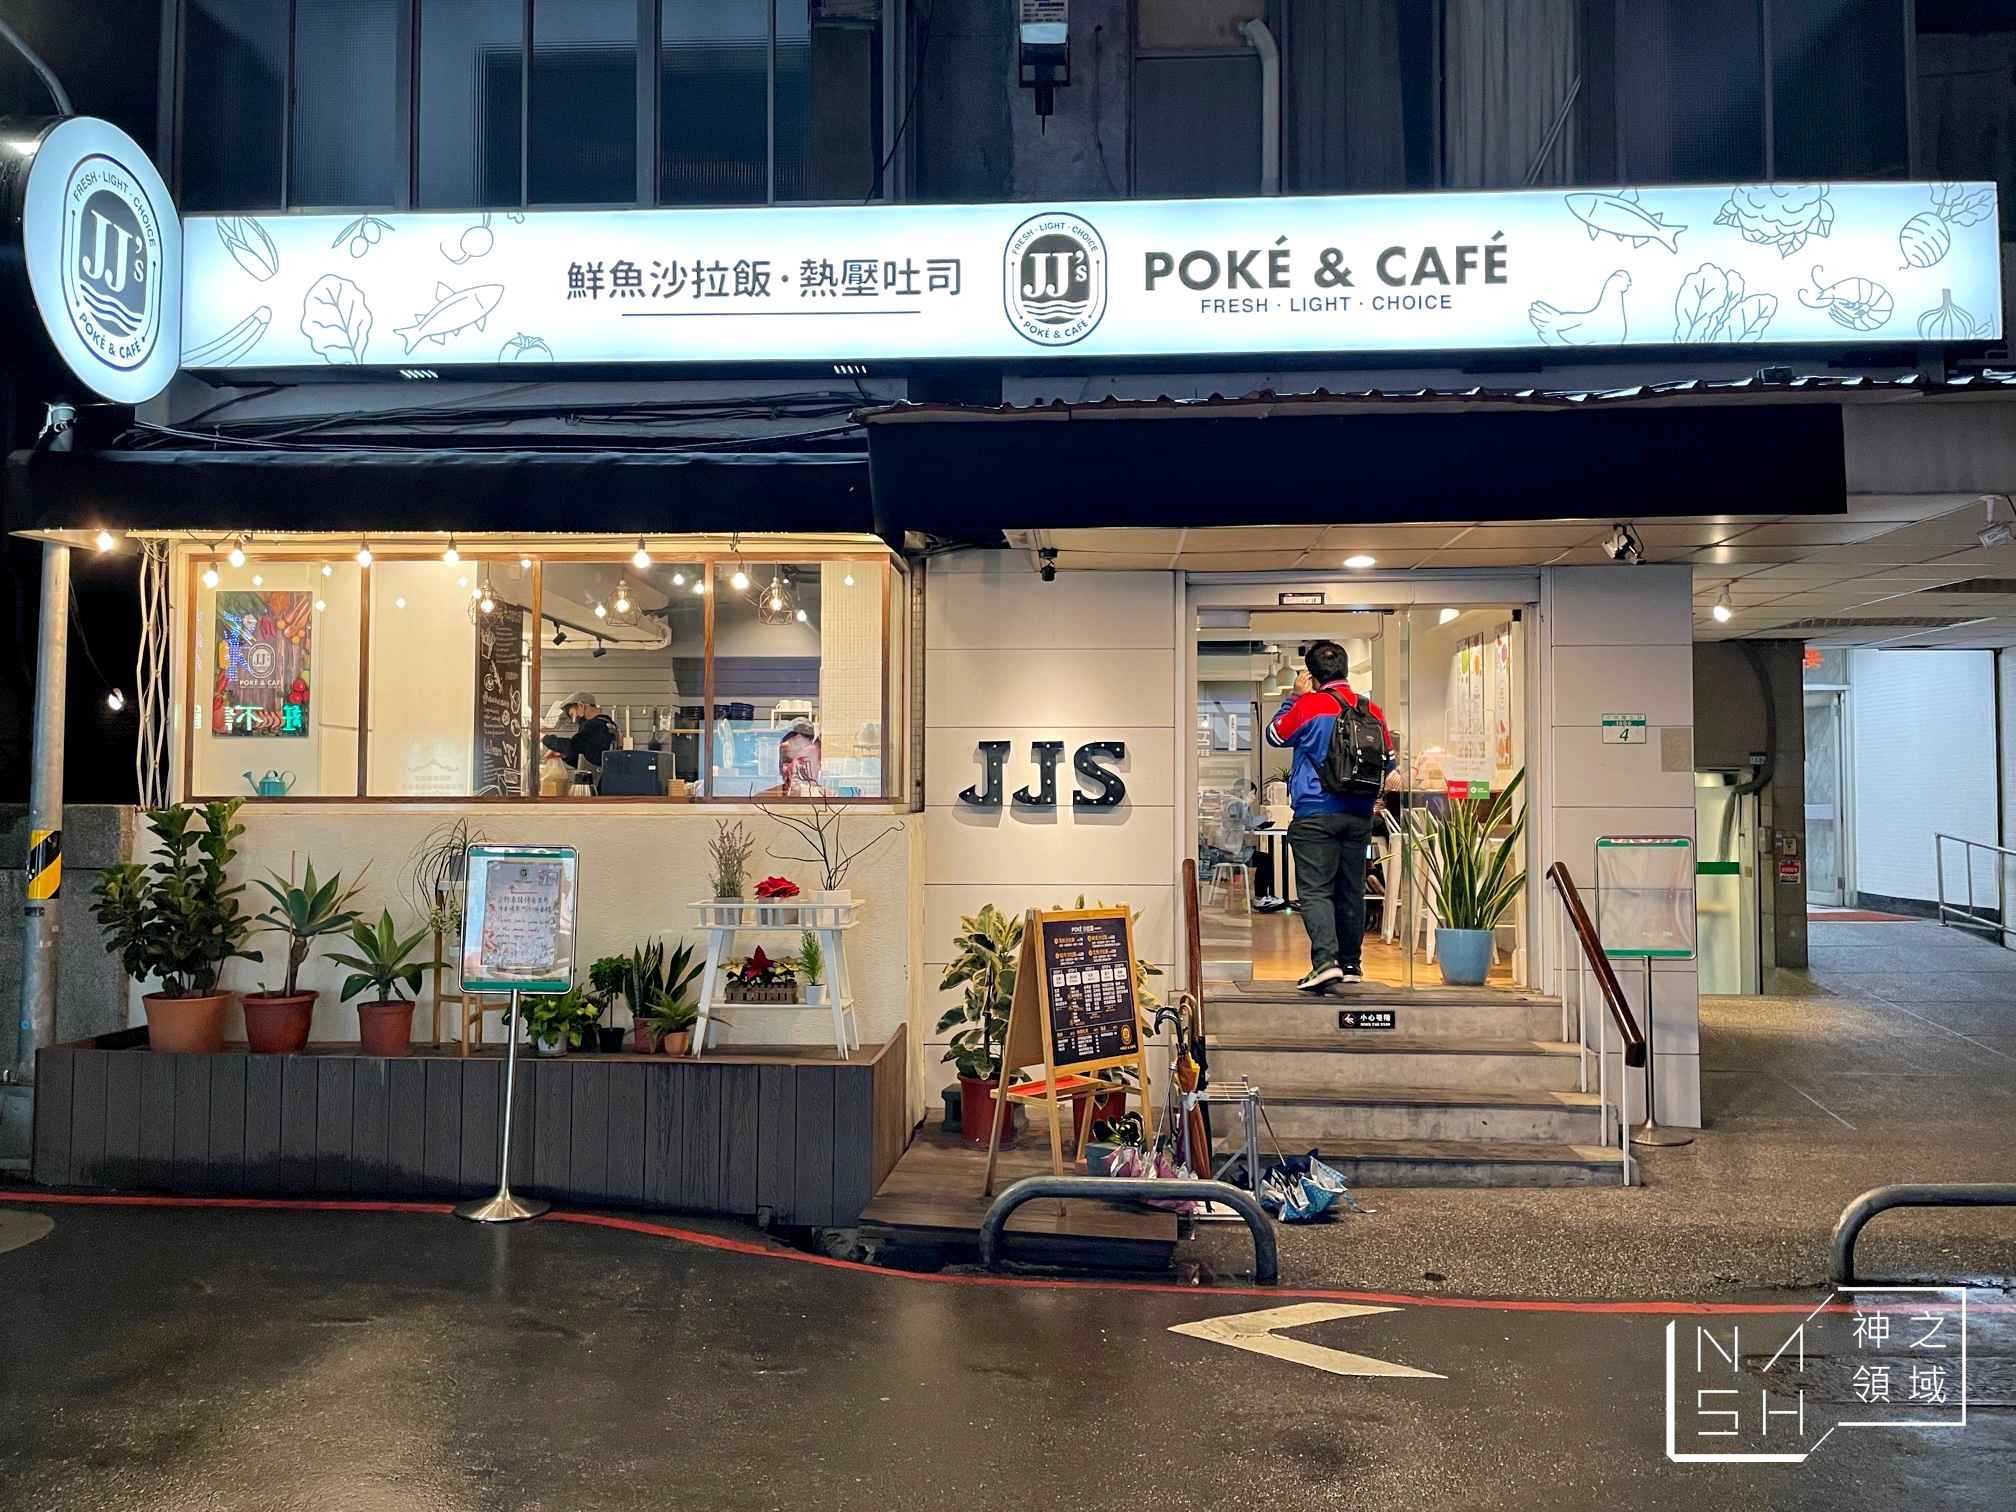 JJ's POKE & CAFE 鮮魚沙拉飯